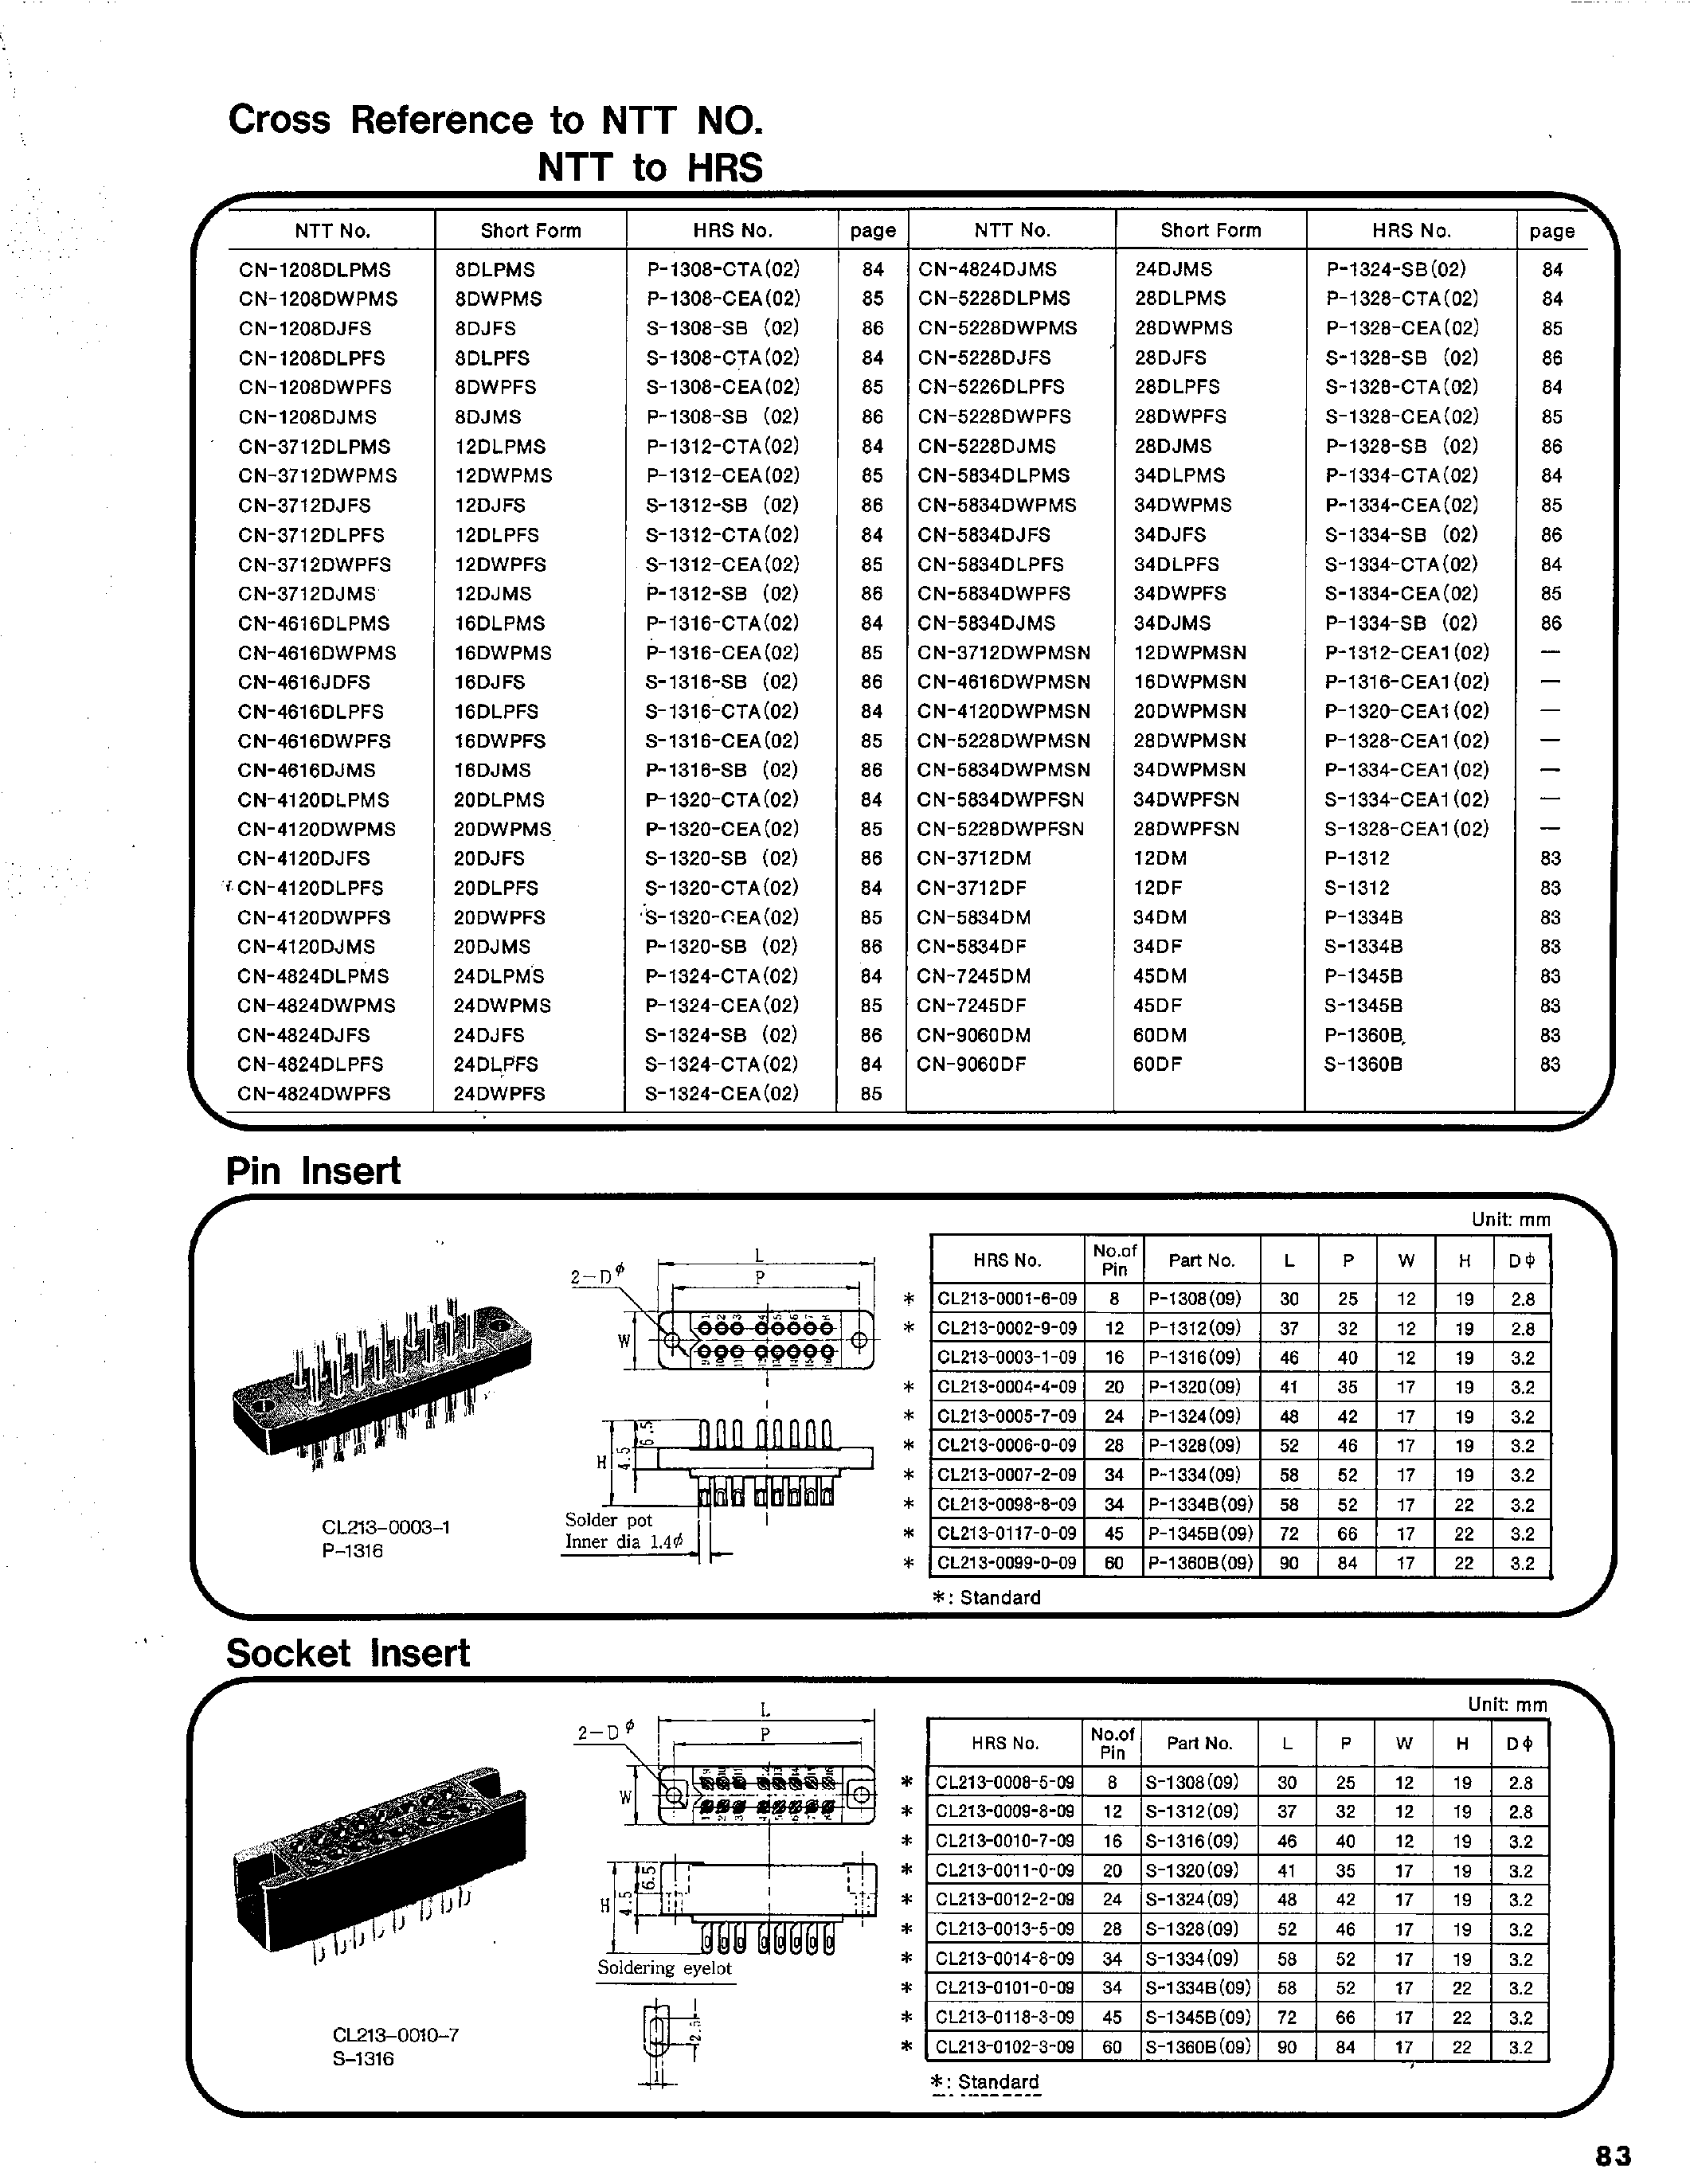 Datasheet P-1312-CE - 1300 SERIES RECTANGULAR CONNECTORS page 2